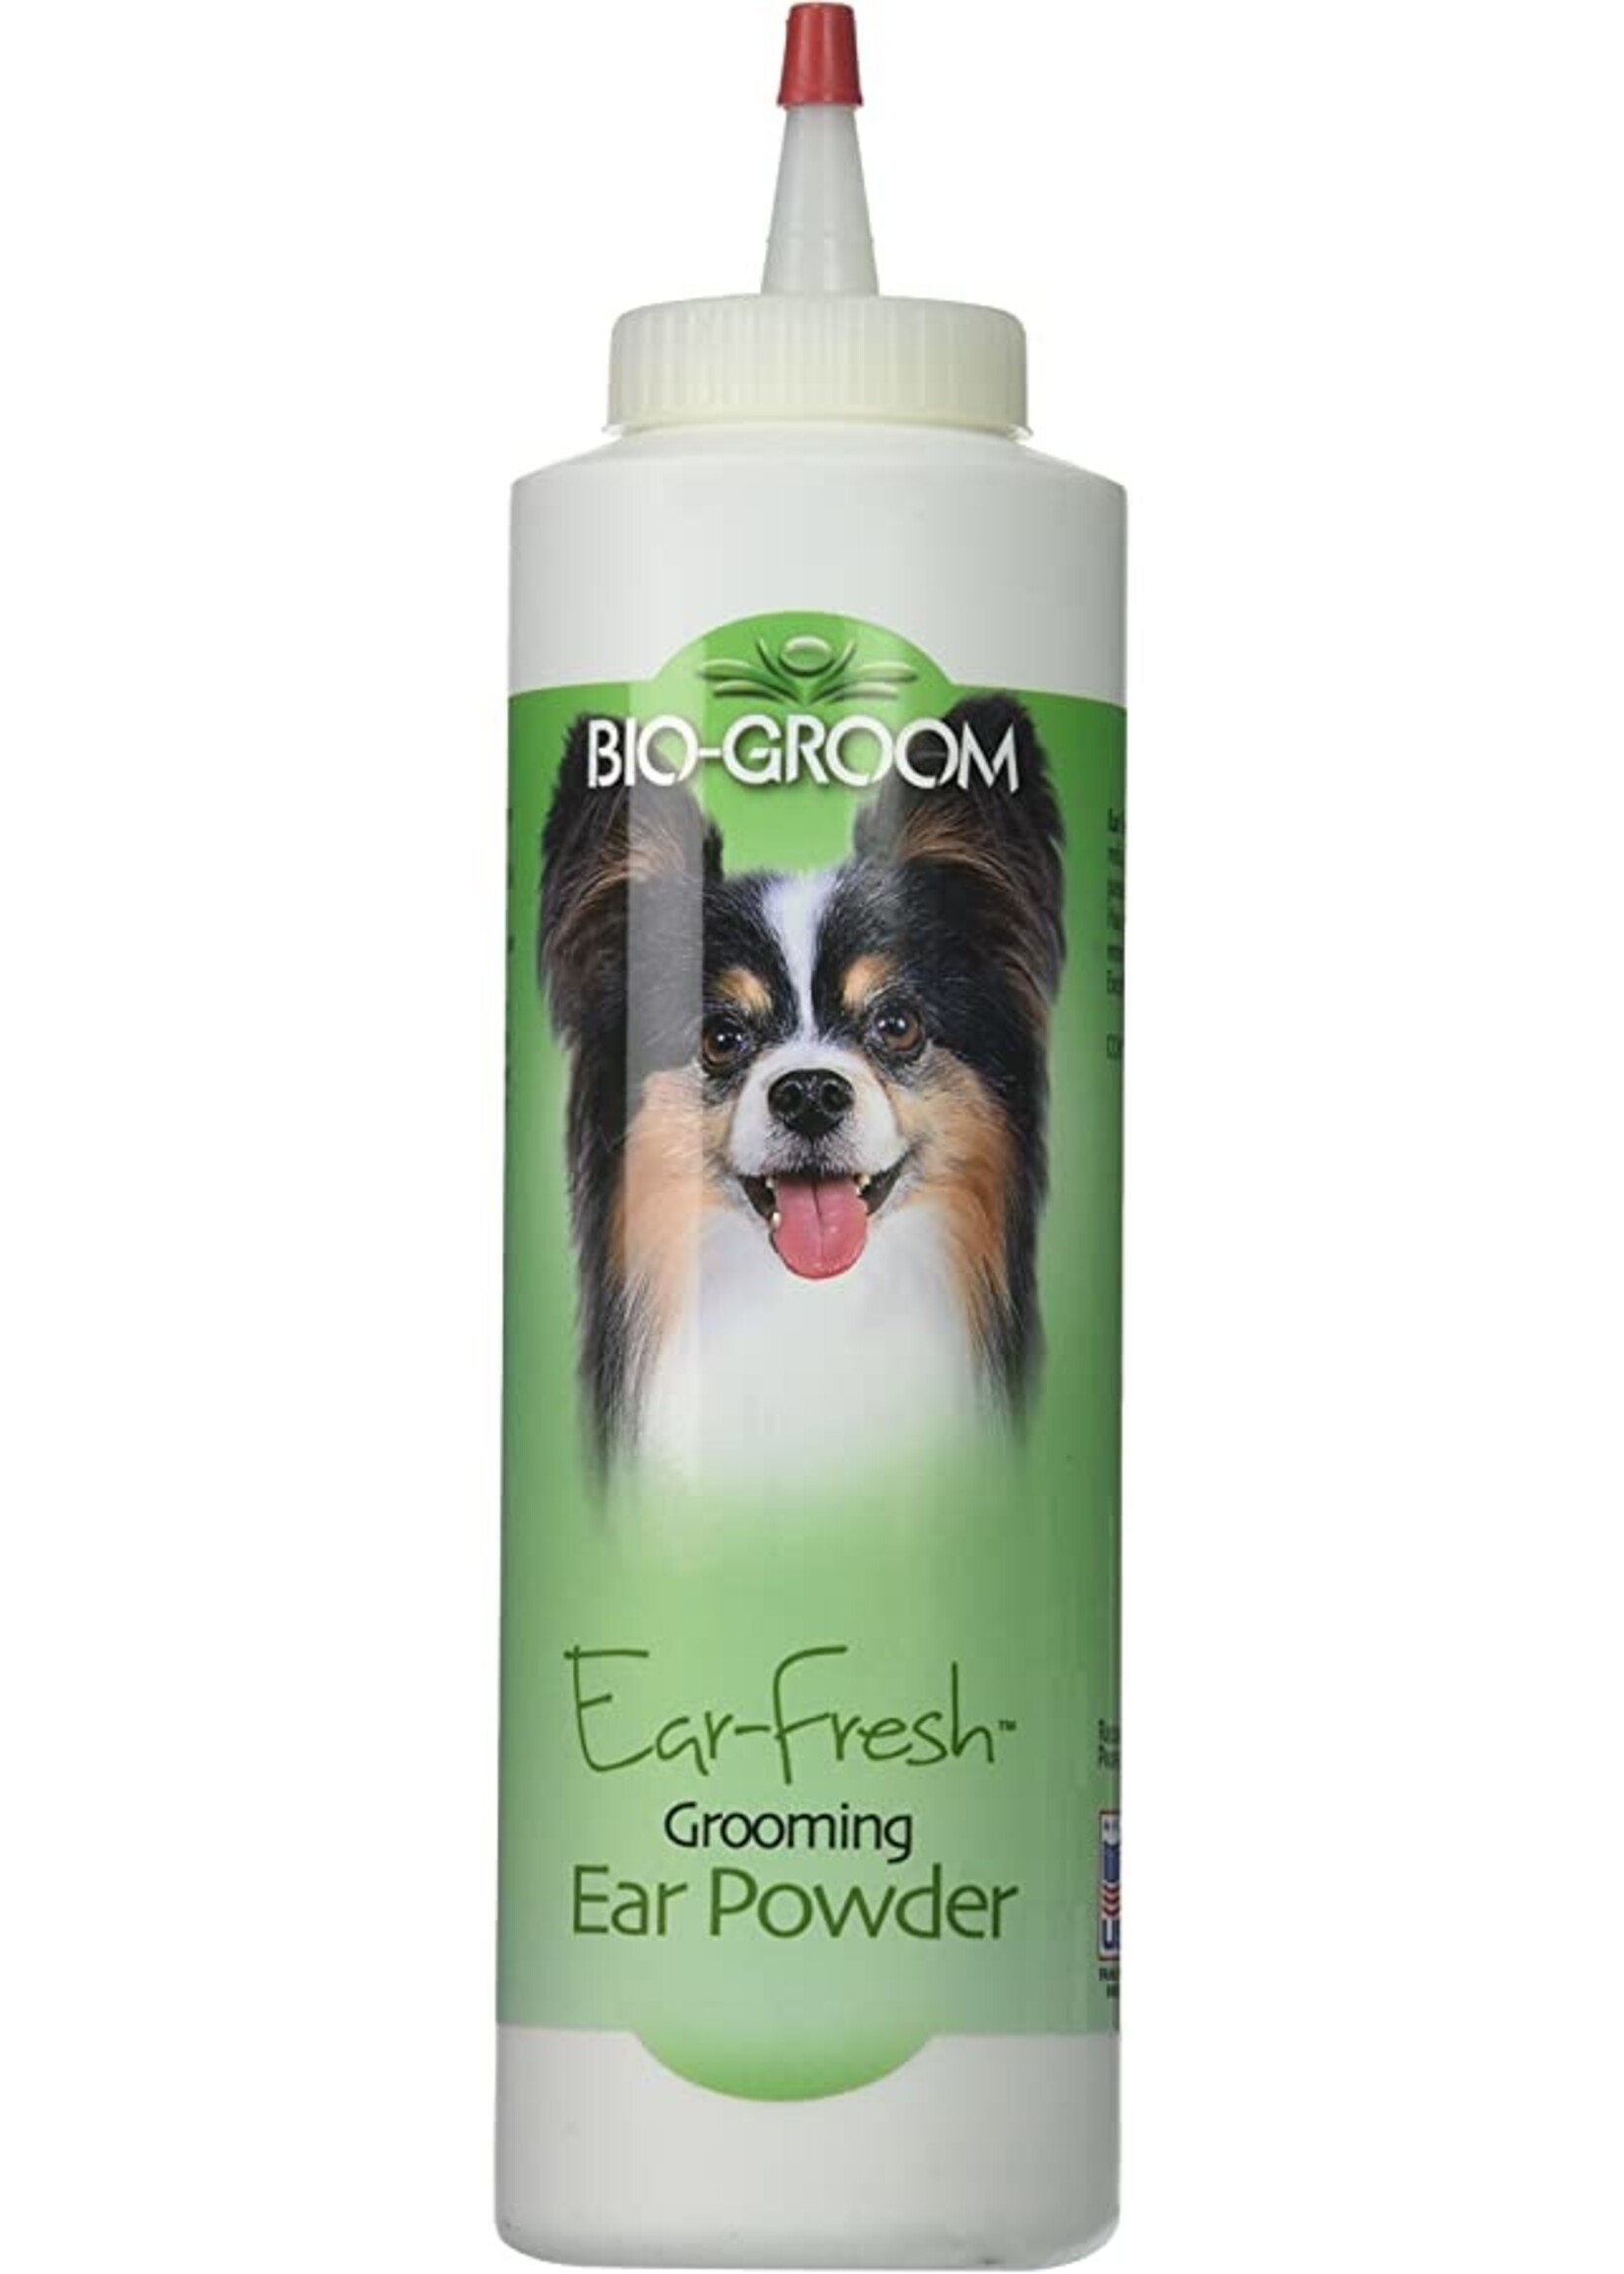 Bio-Groom Bio-Groom Ear-Fresh Grooming Ear Powder